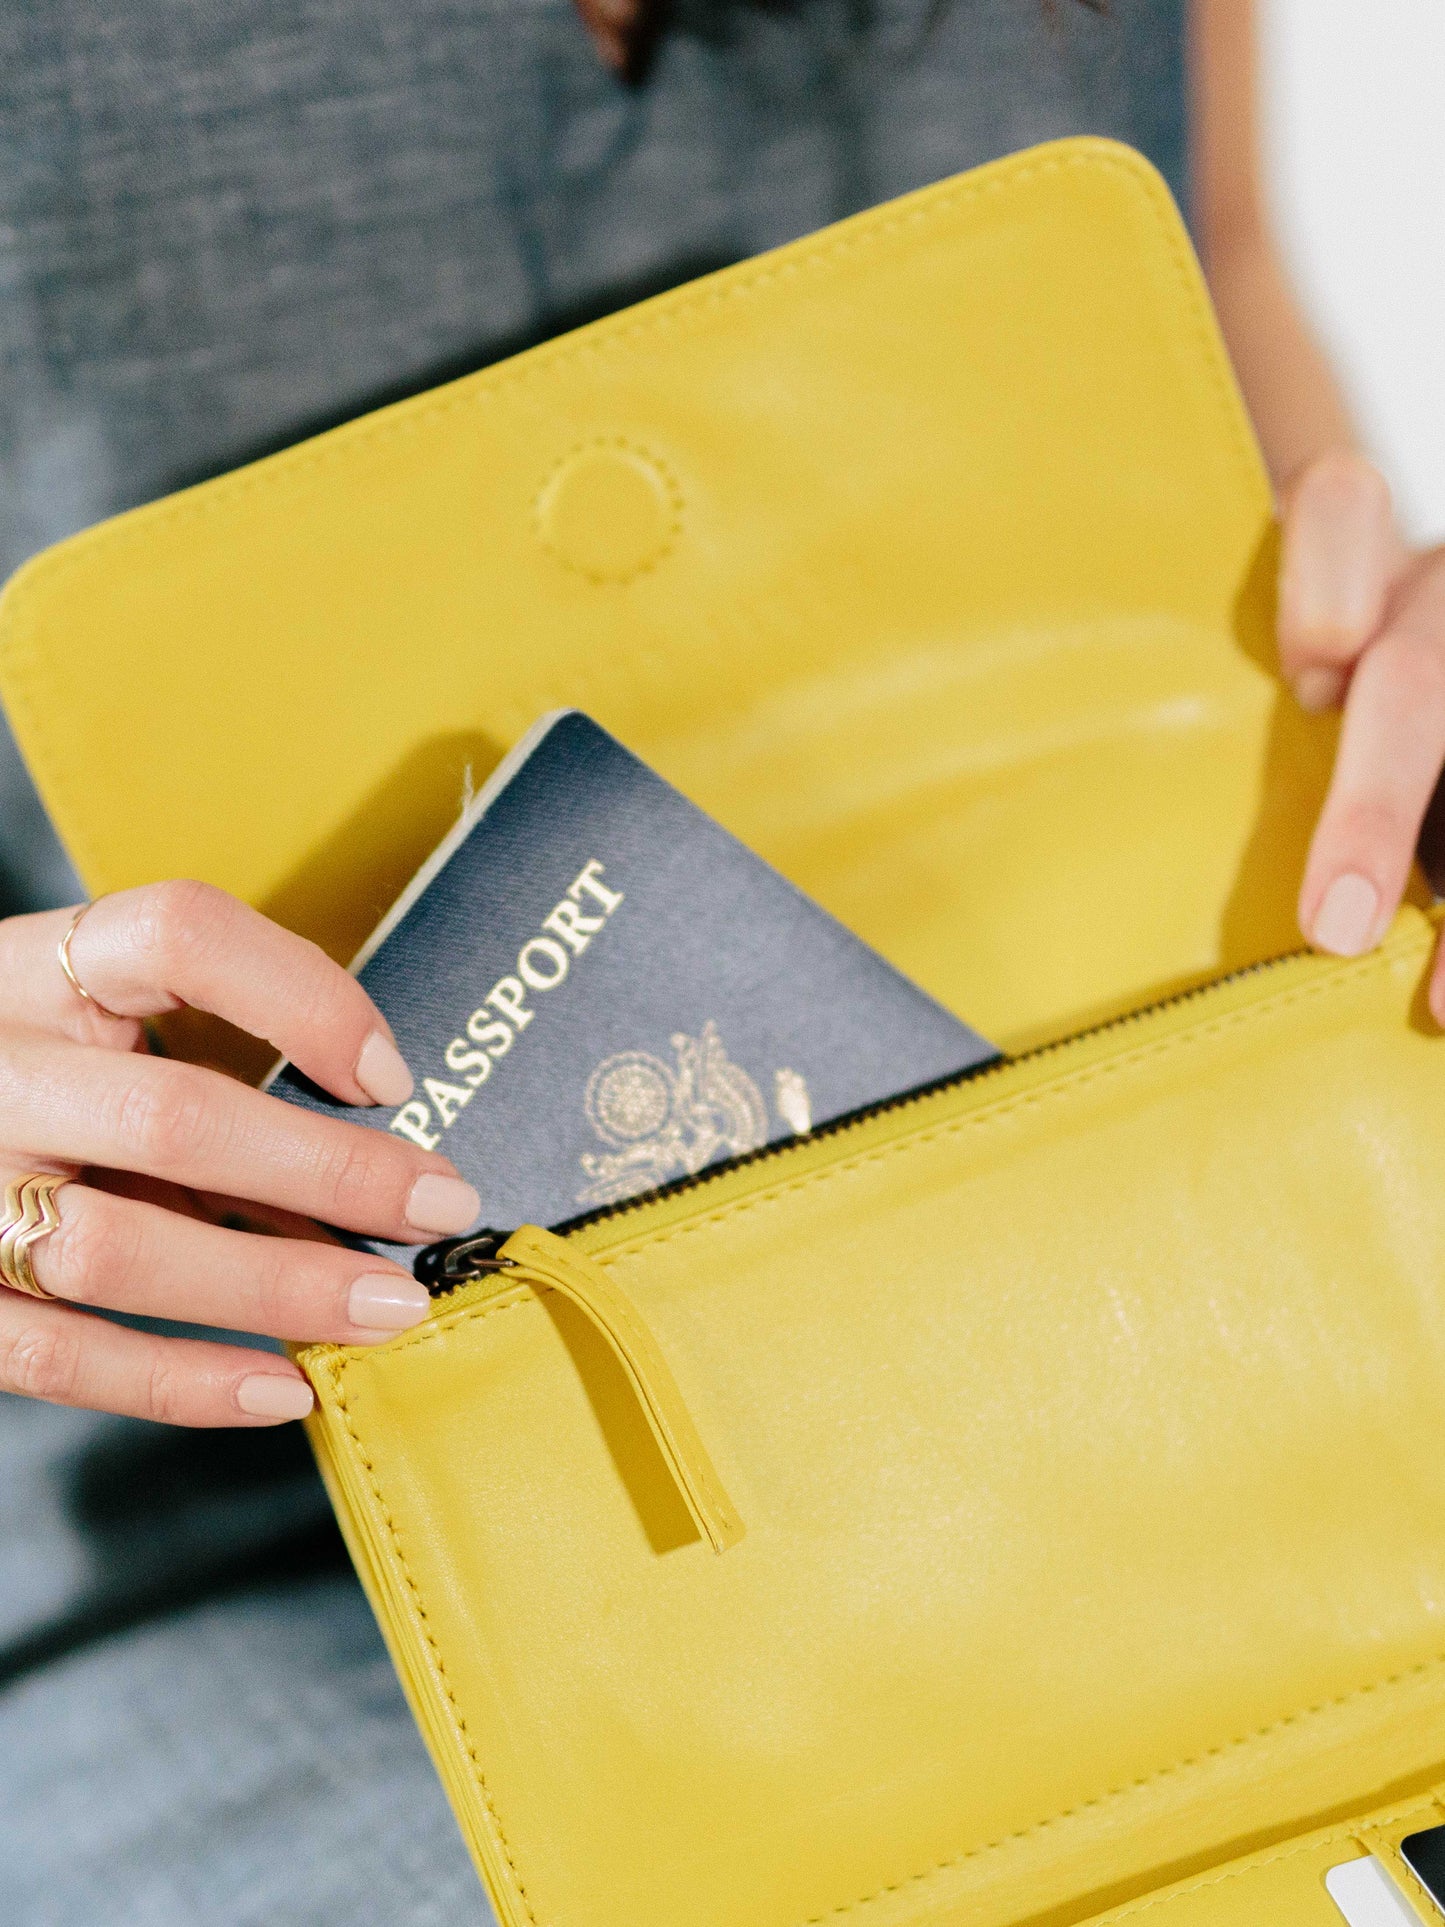 Travel wallet payton james- model holding wallet with passport showing-yellow passport wallet payton James